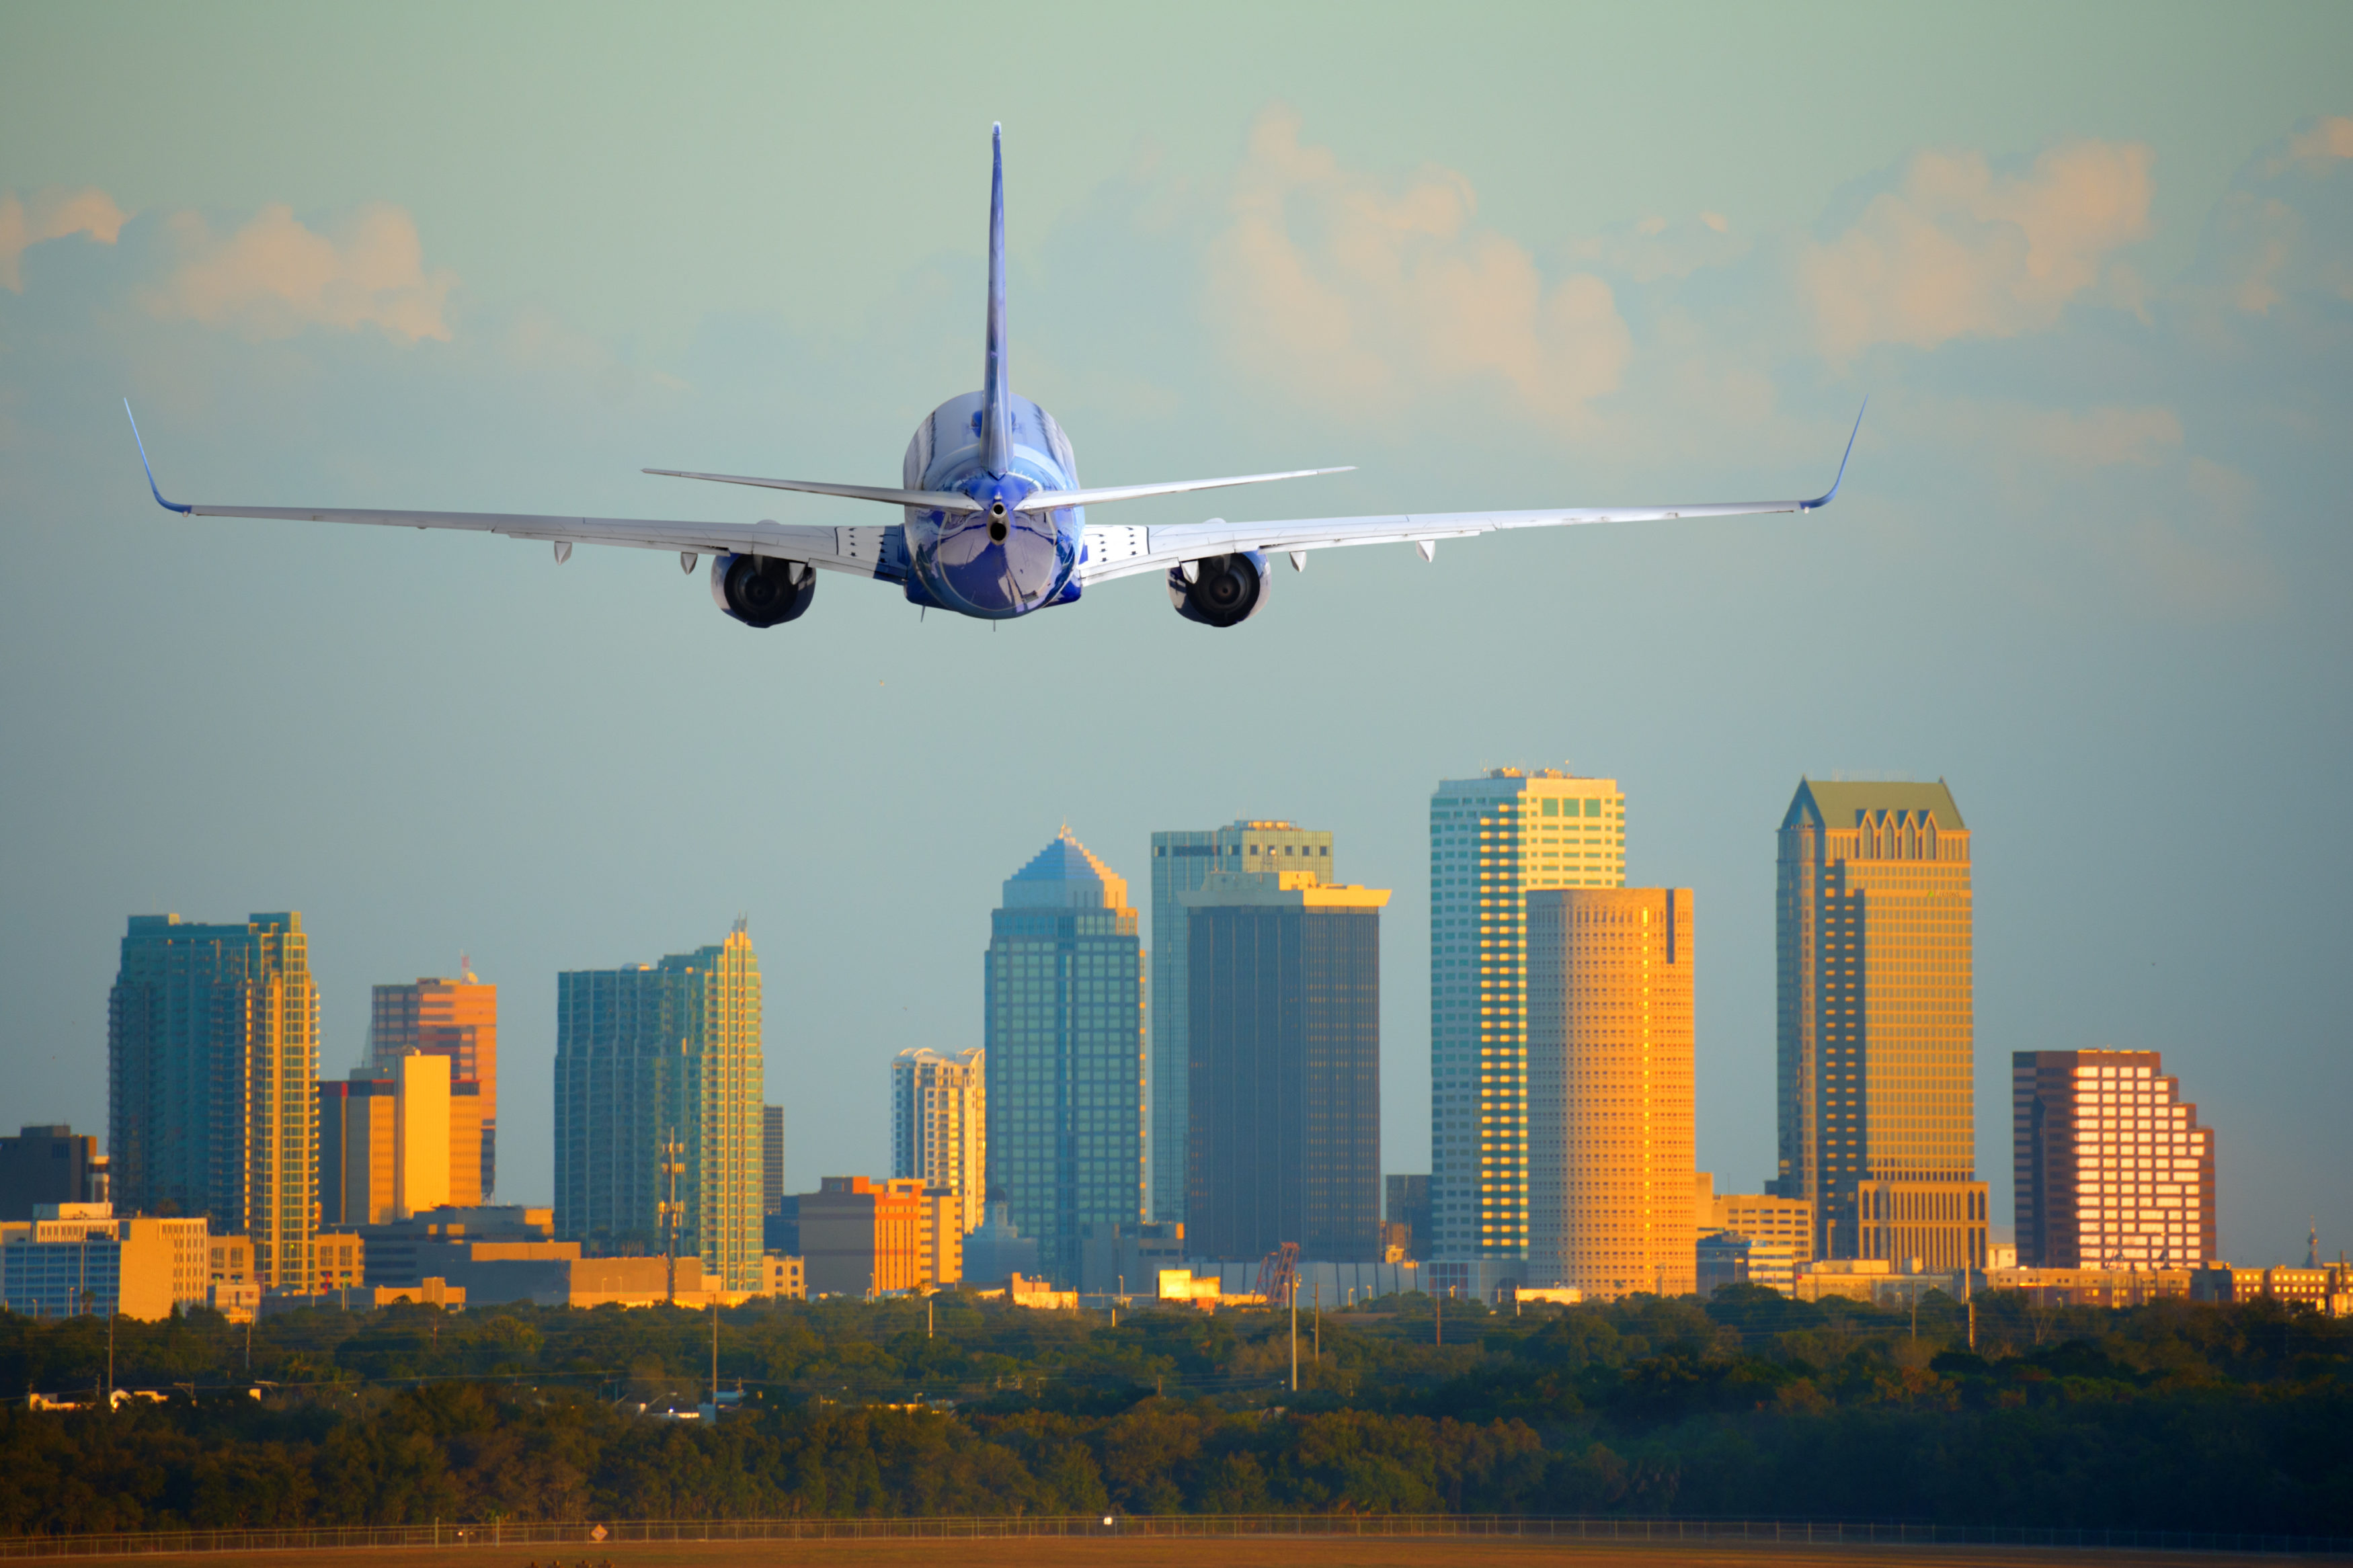 Passenger jet airliner plane arriving or departing Tampa International Airport in Florida at sunset or sunrise